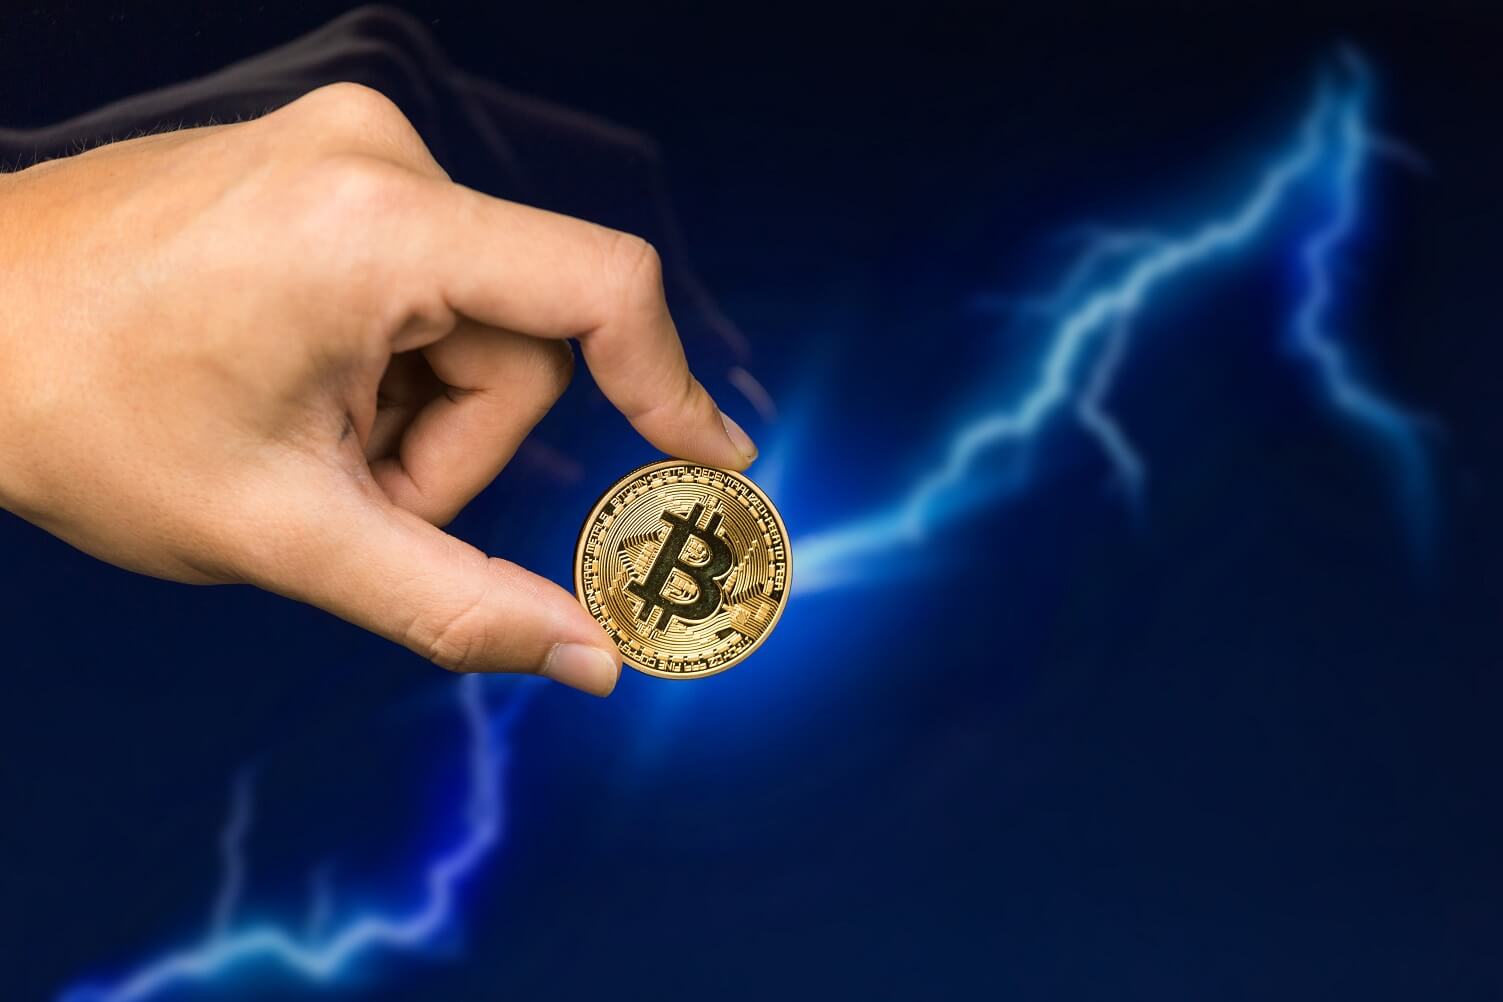 Strike, the Bitcoin (BTC) payment app based on the Lightning network, raises  million